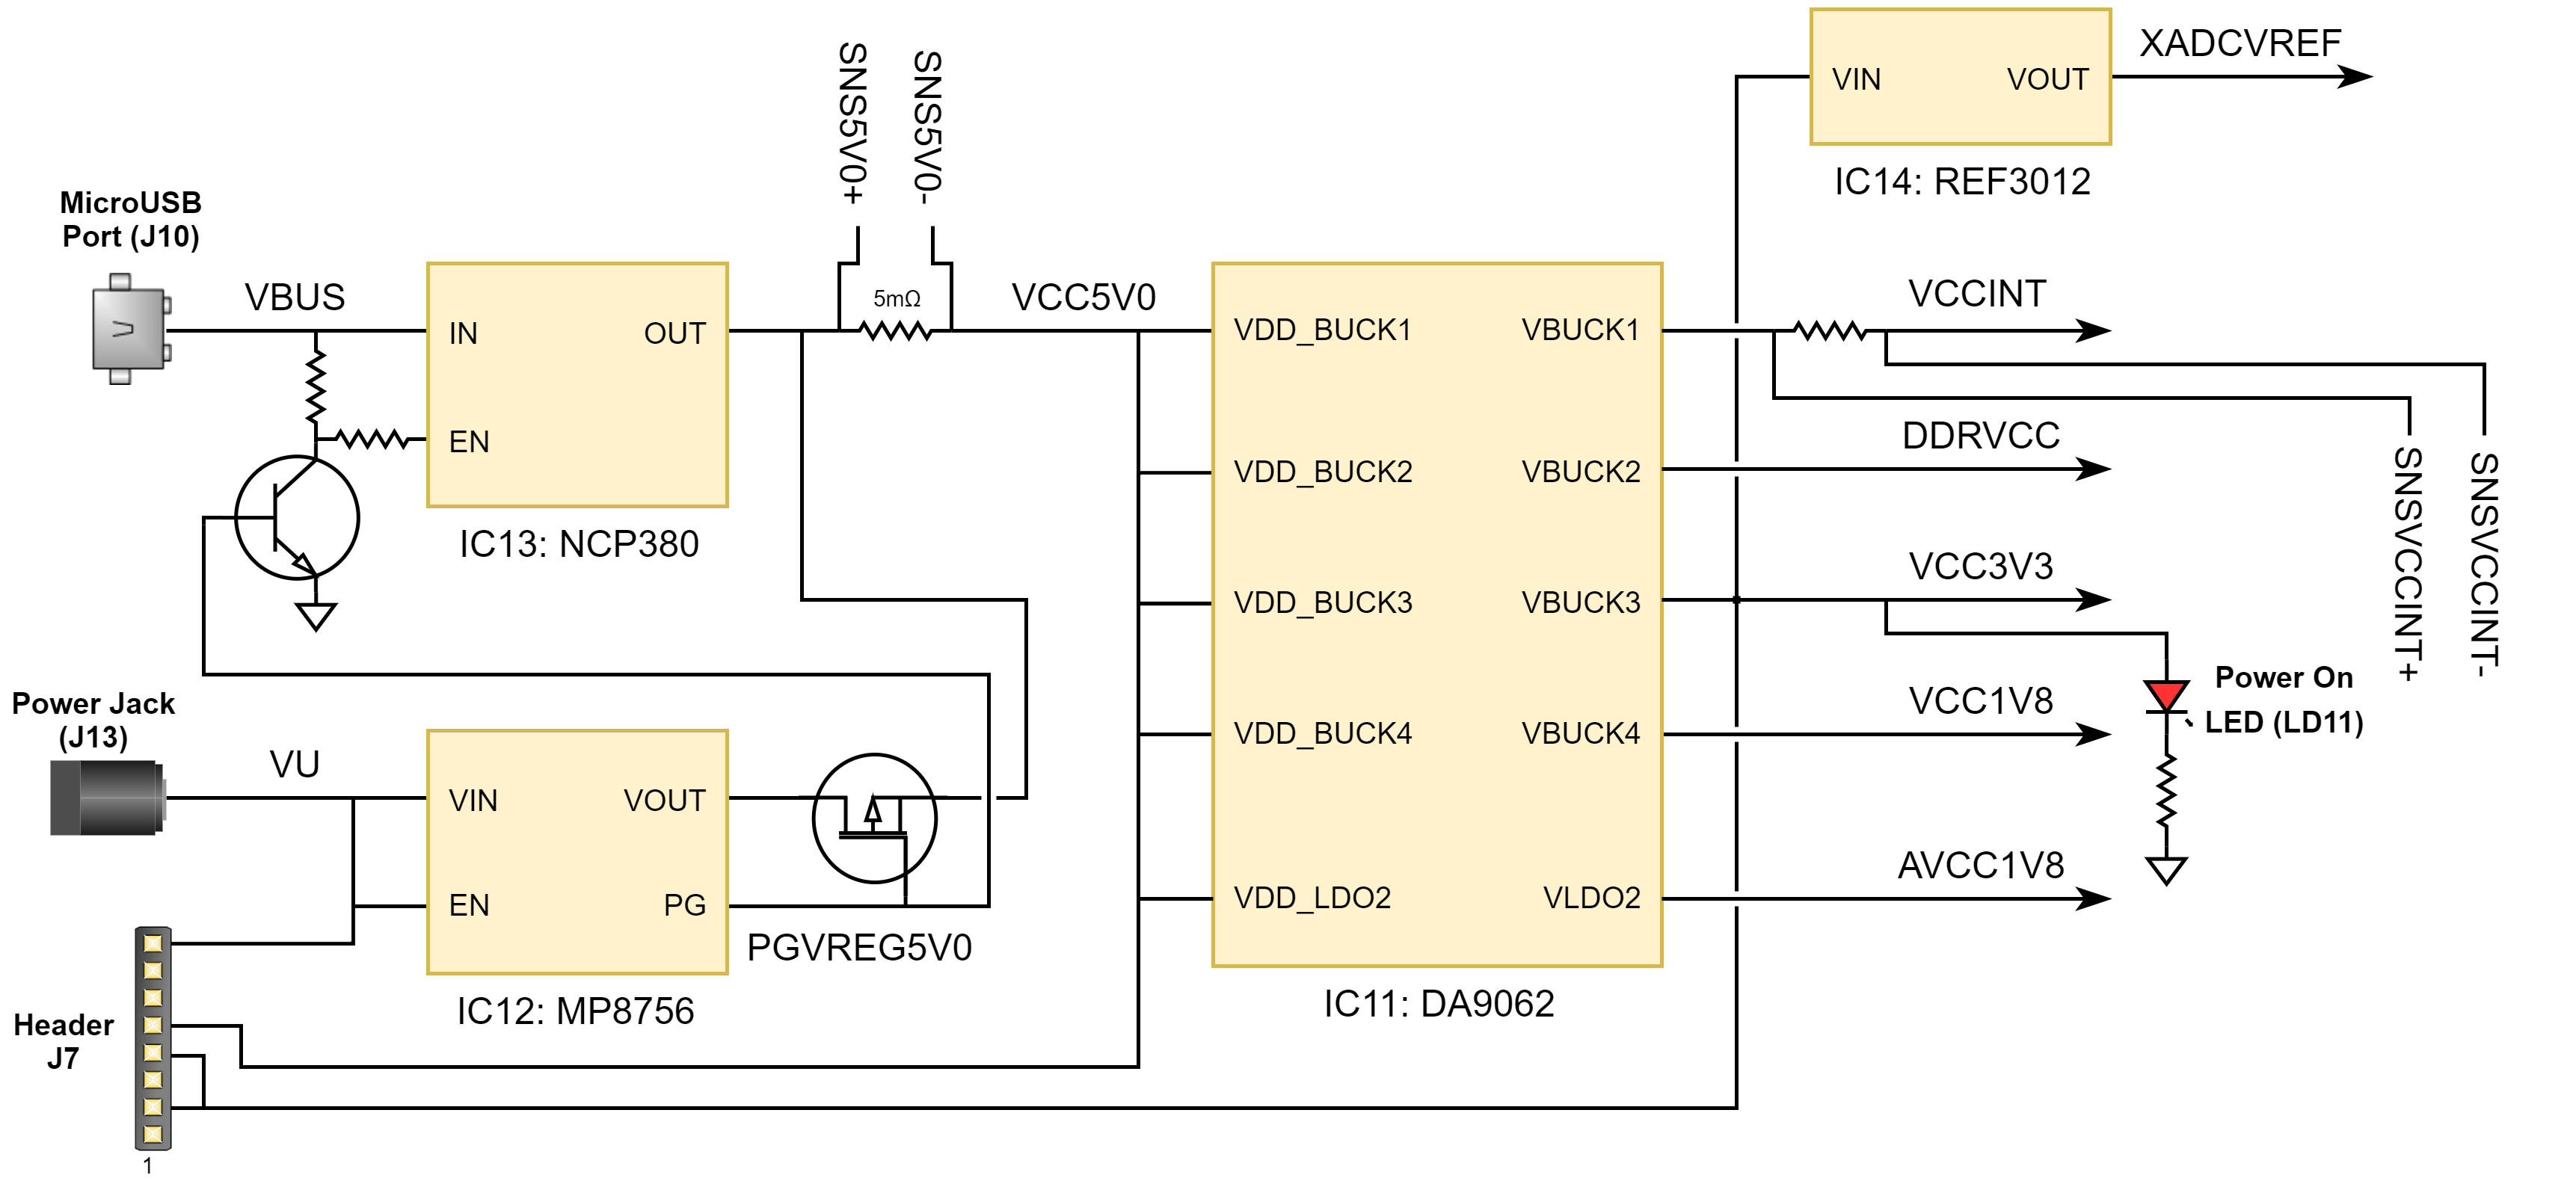 Figure 3.1 Arty A7 Power Circuit